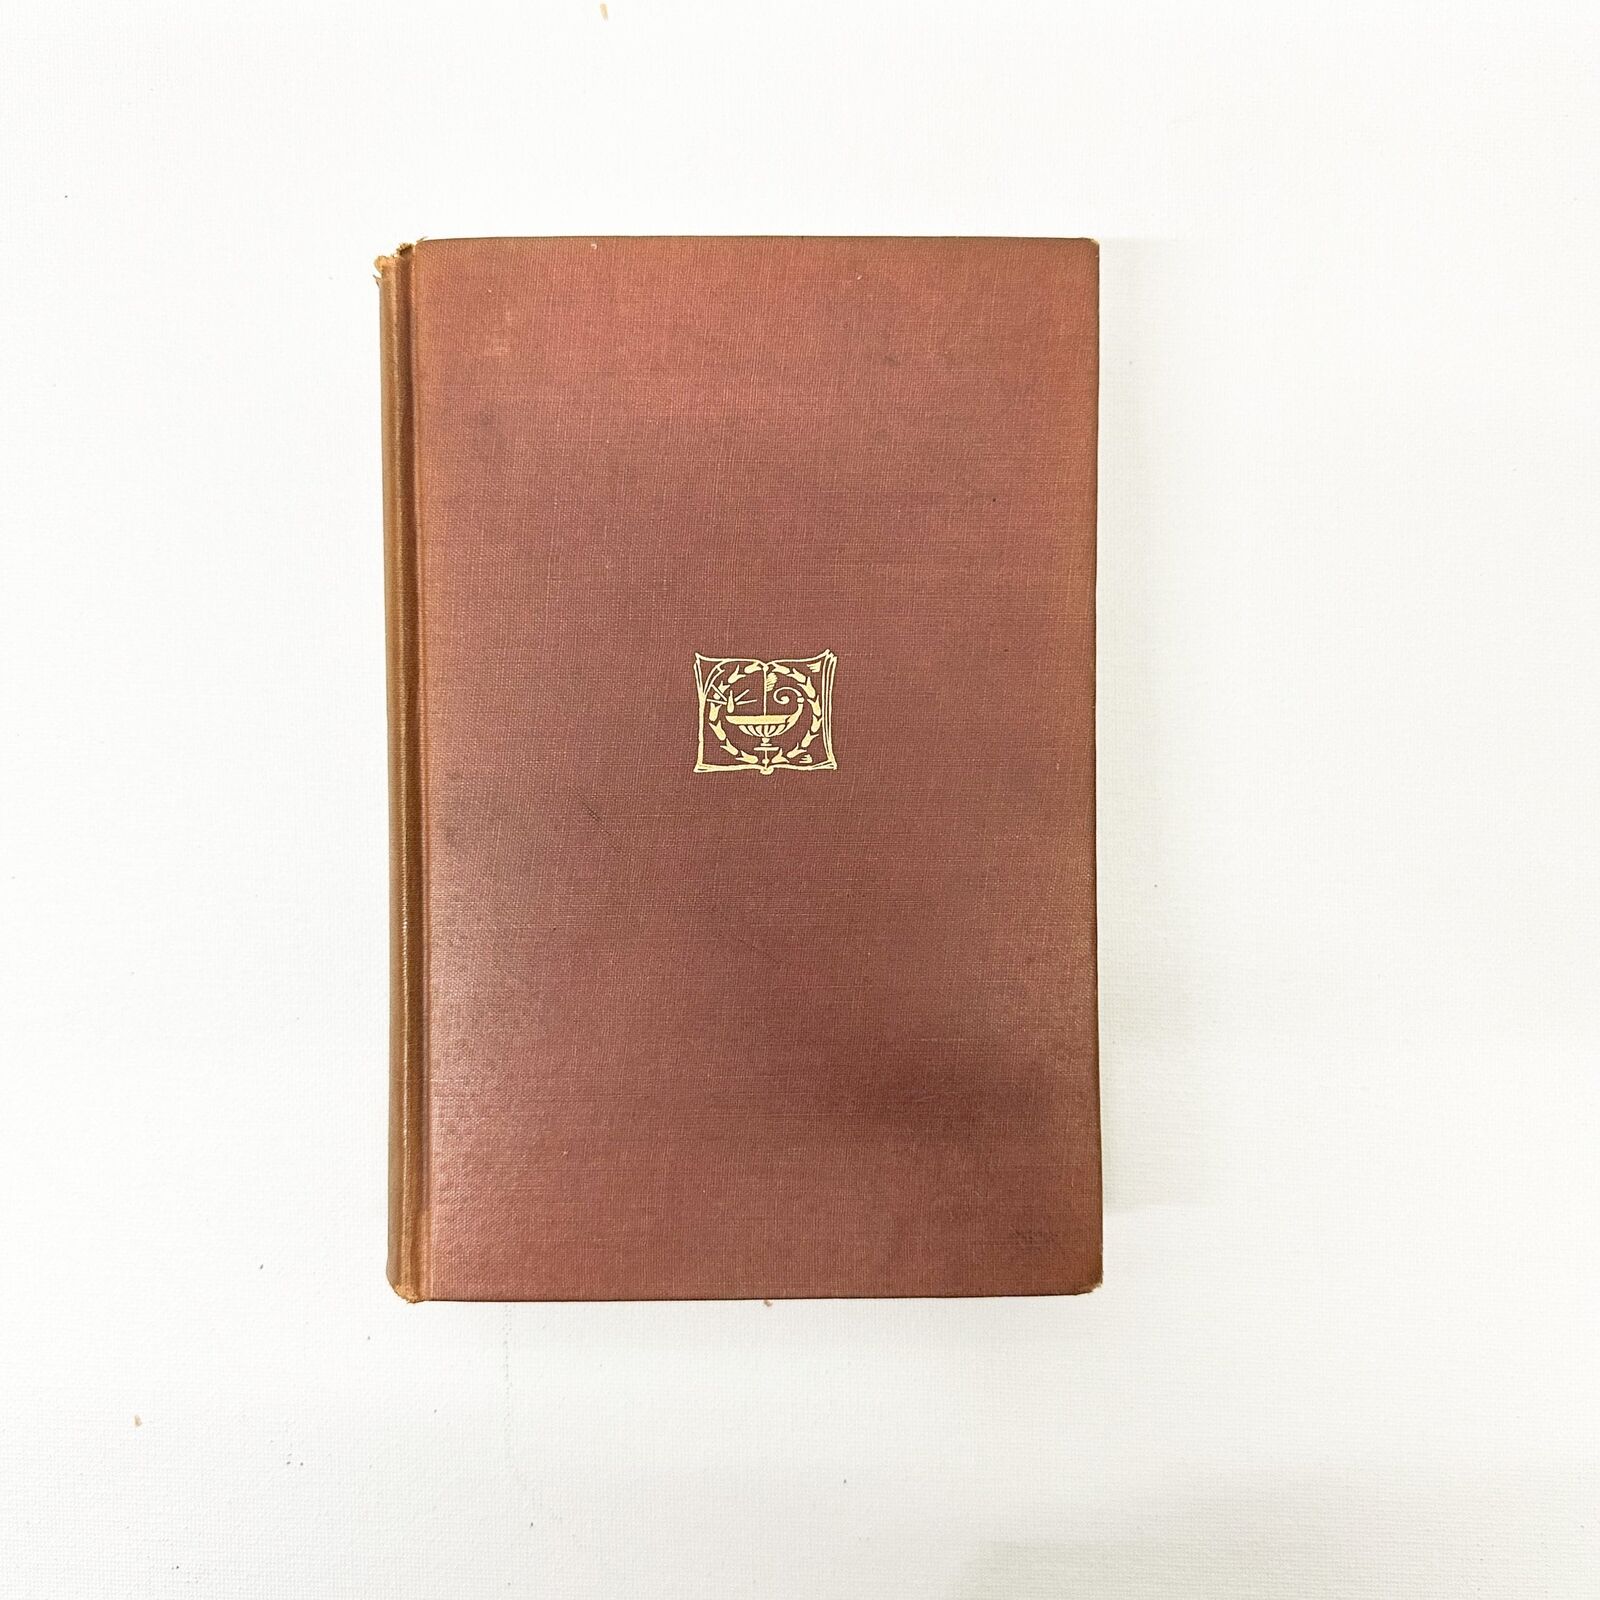 New Arabian Nights by Robert Louis Stevenson Rare 1904 Edition